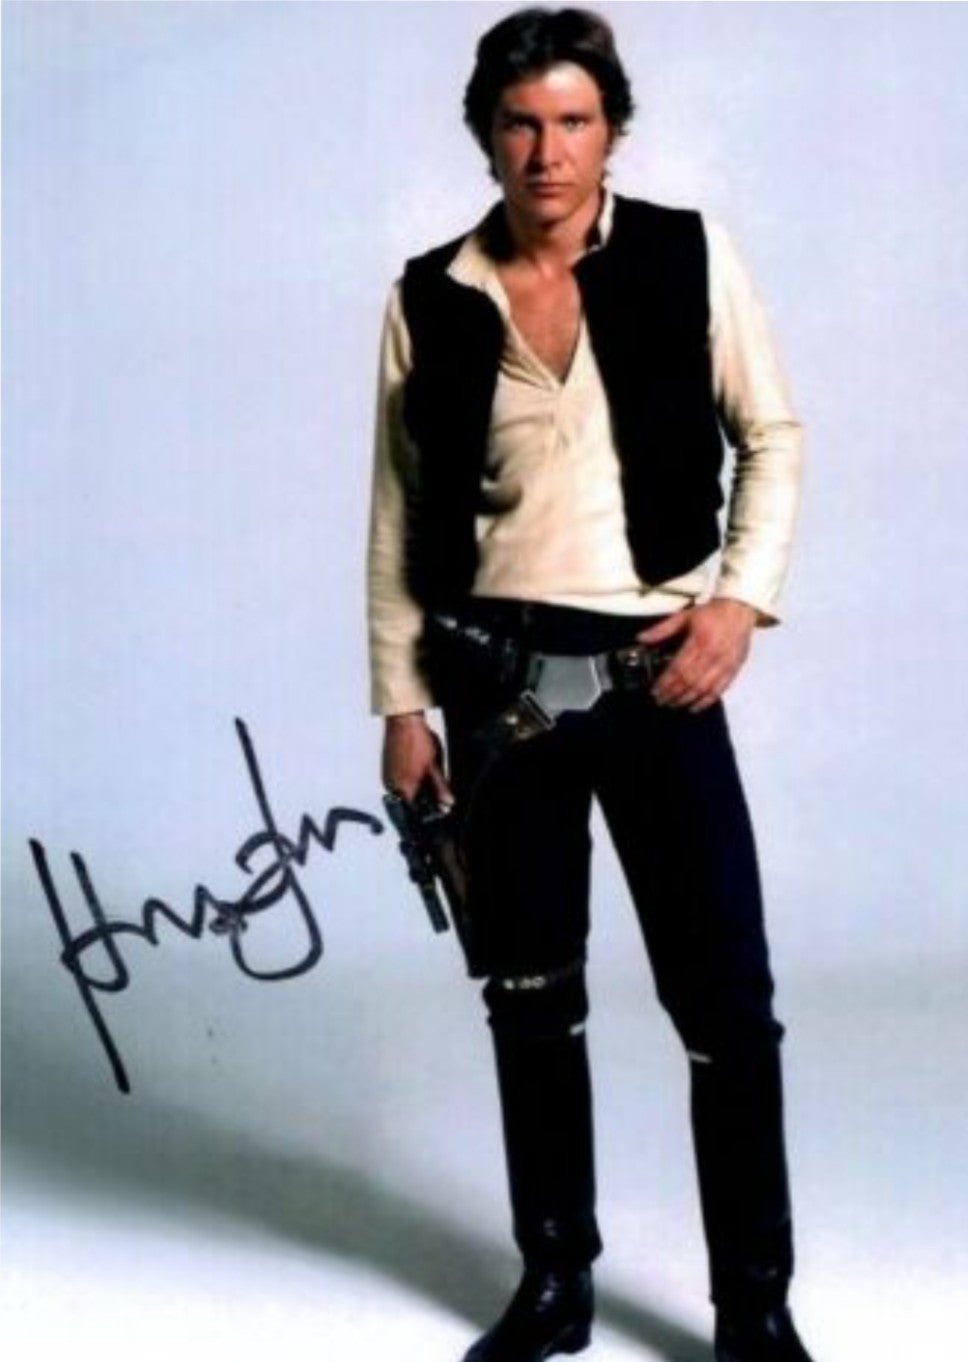 HARRISON FORD signed autographed photo COA Hologram Beckett Autographs